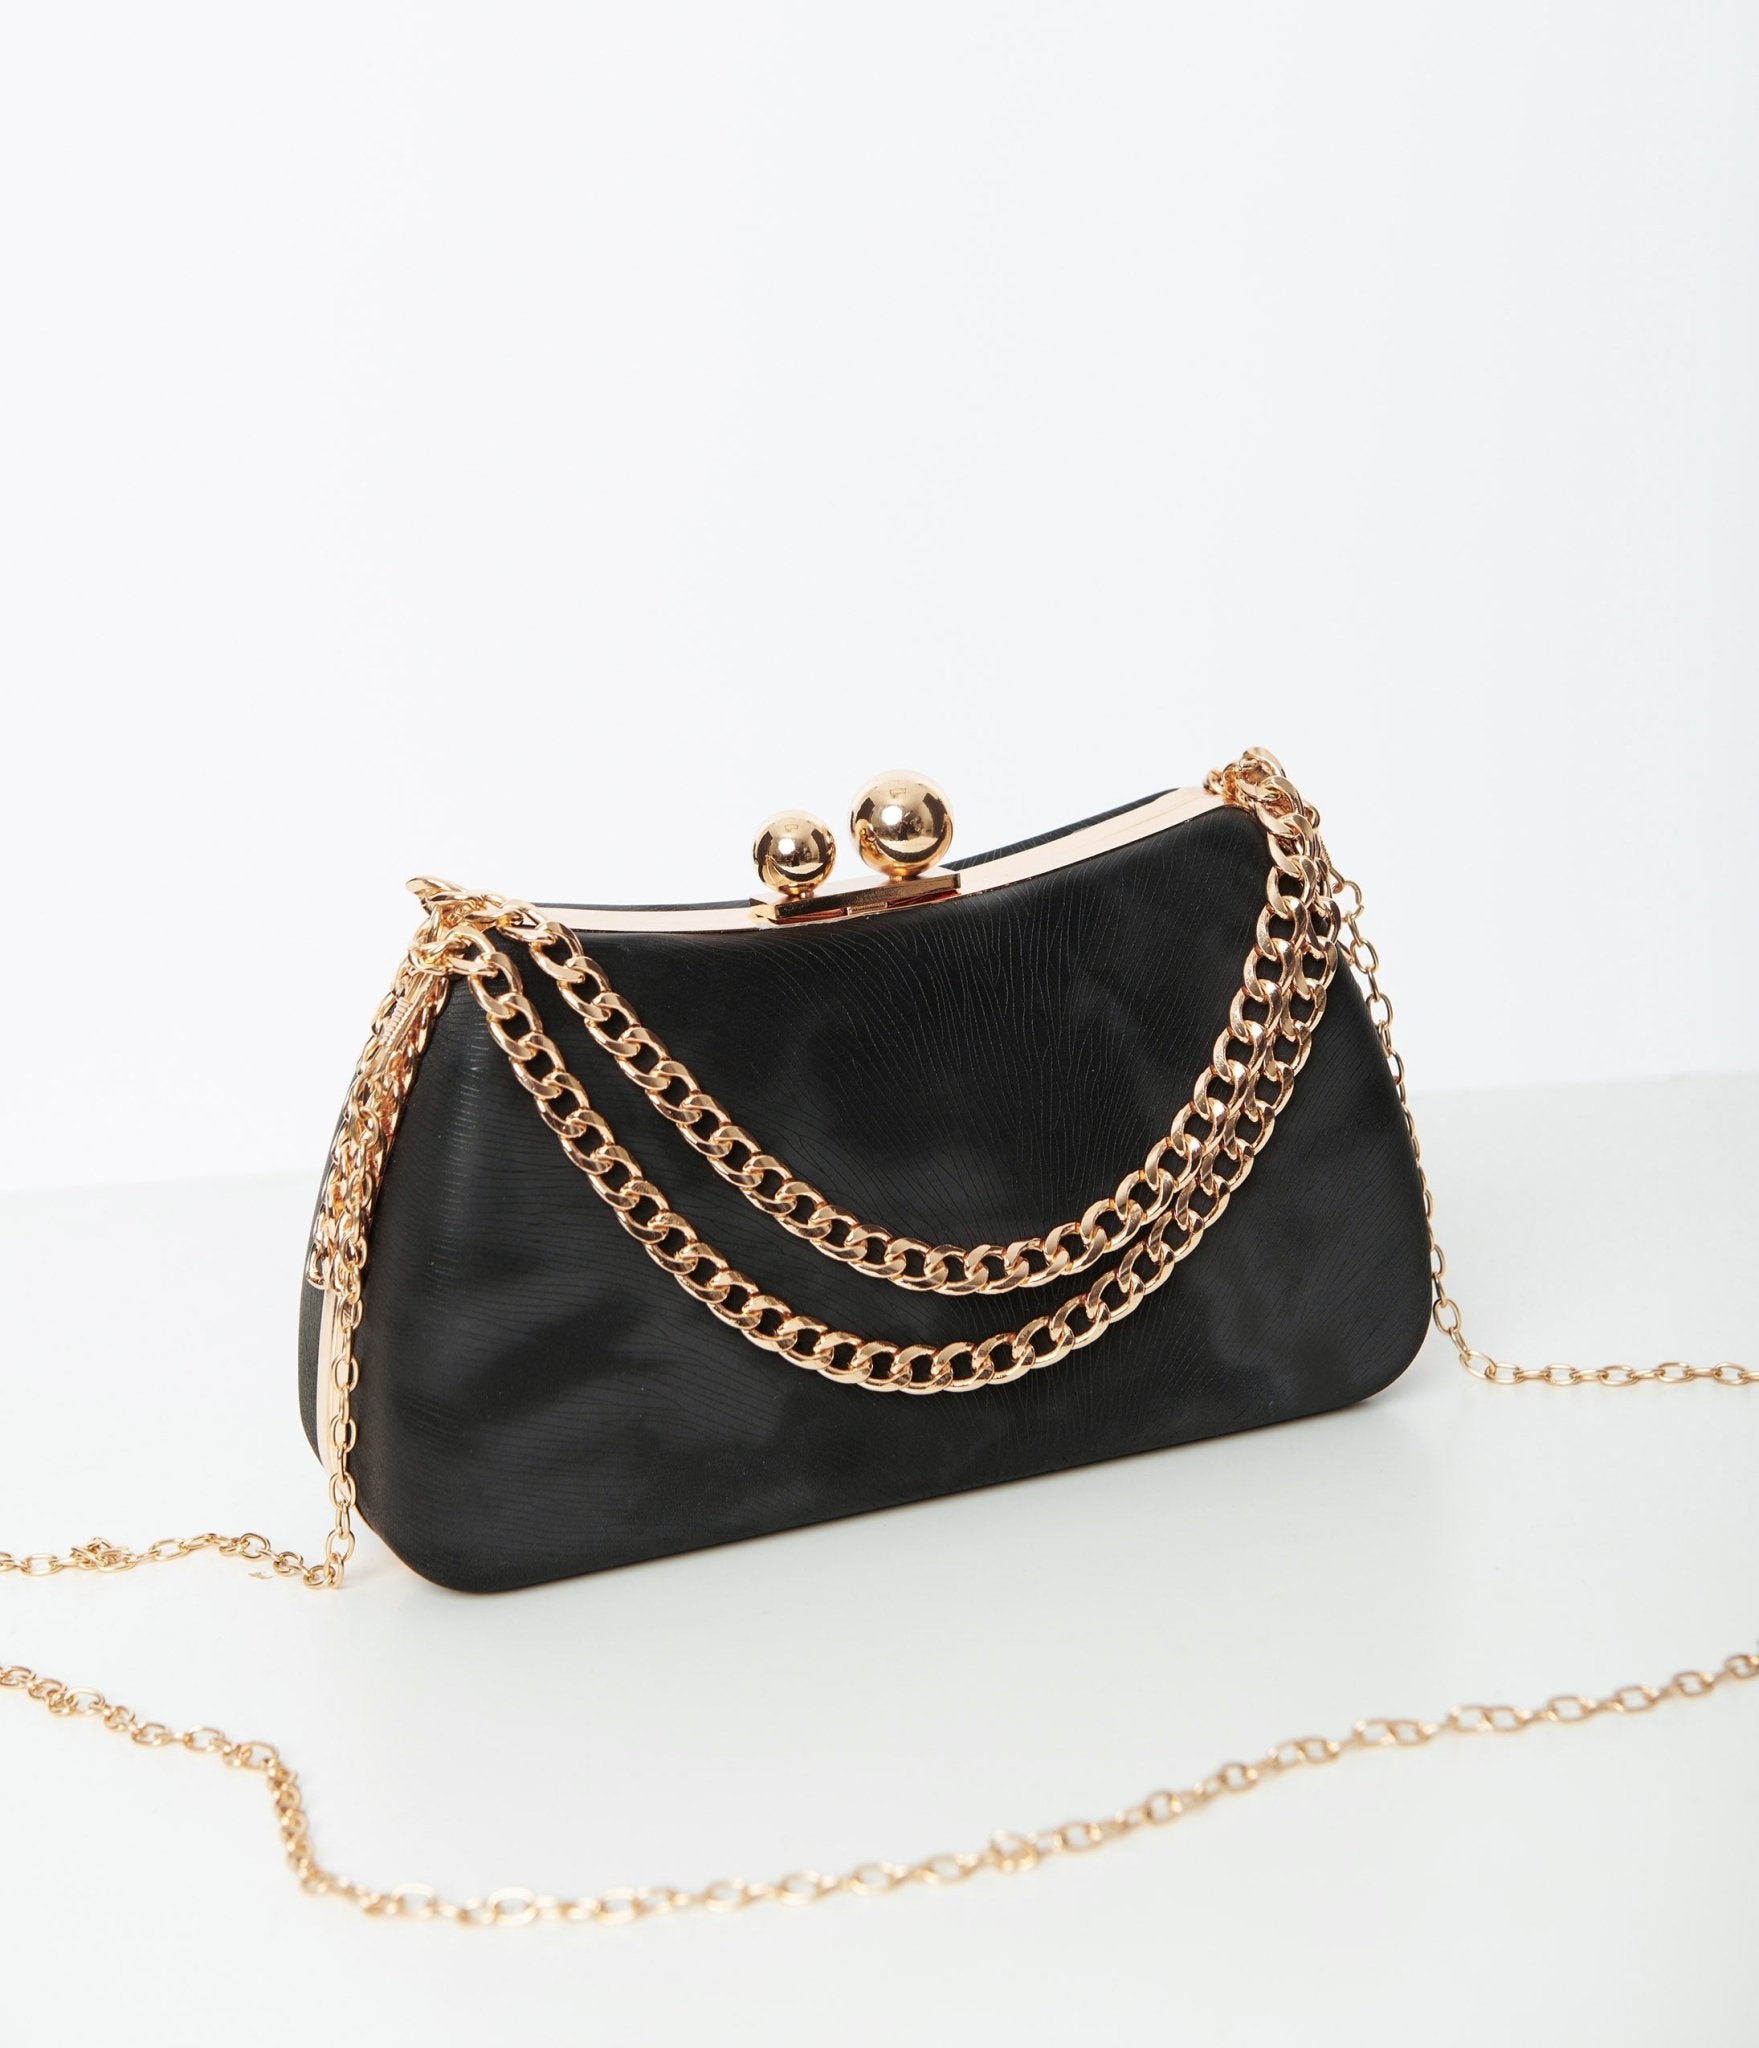 Black & Gold Textured Clutch Hand Bag